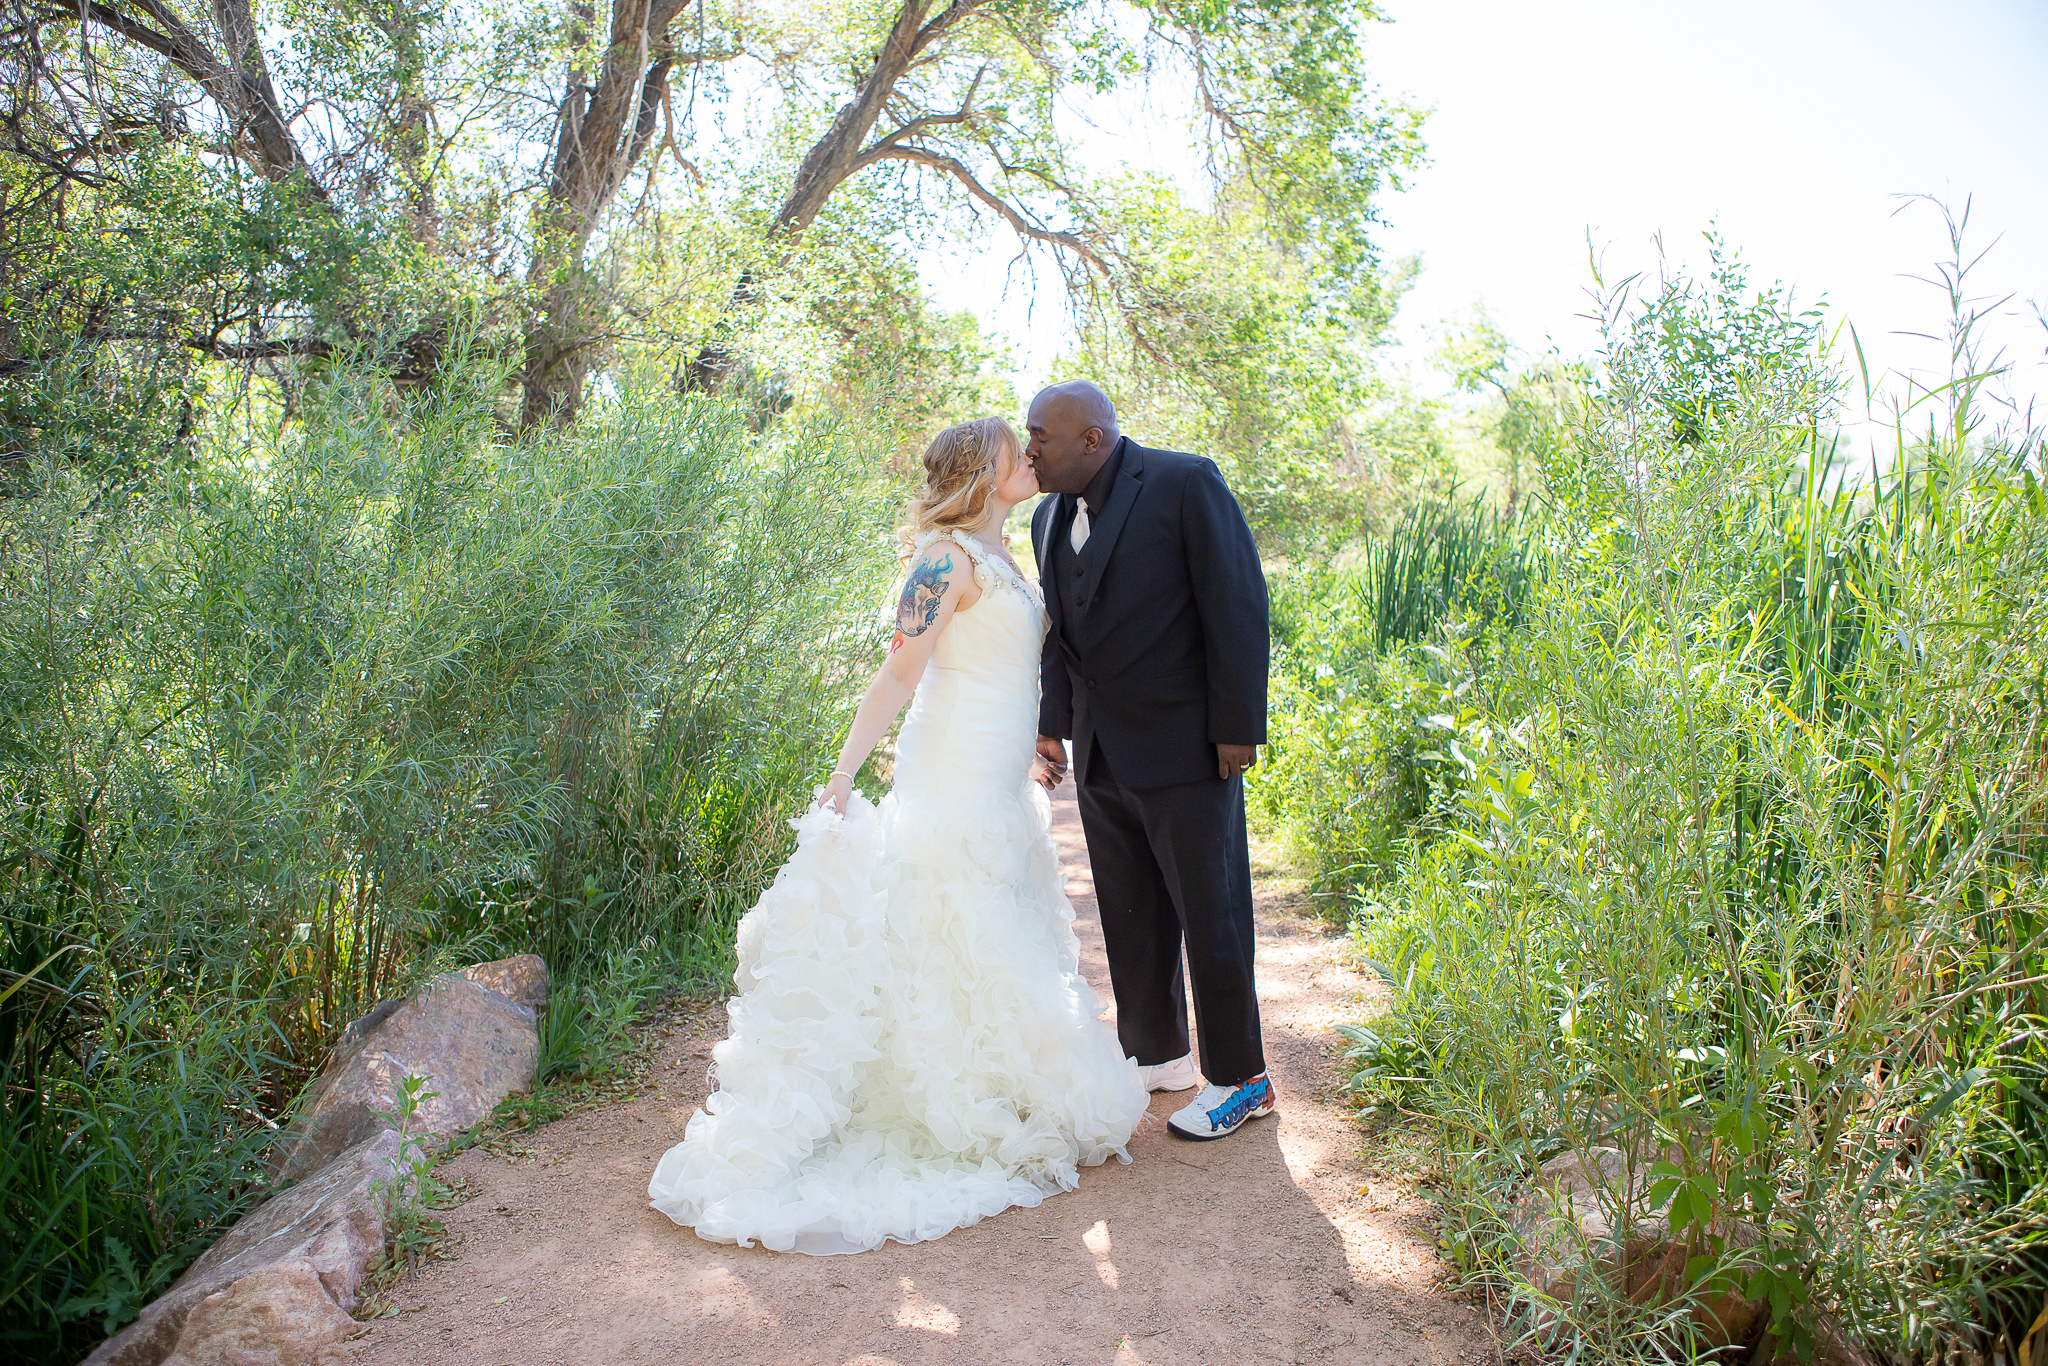 Shayne and Megan Rock the Dress | Colorado Springs Photography